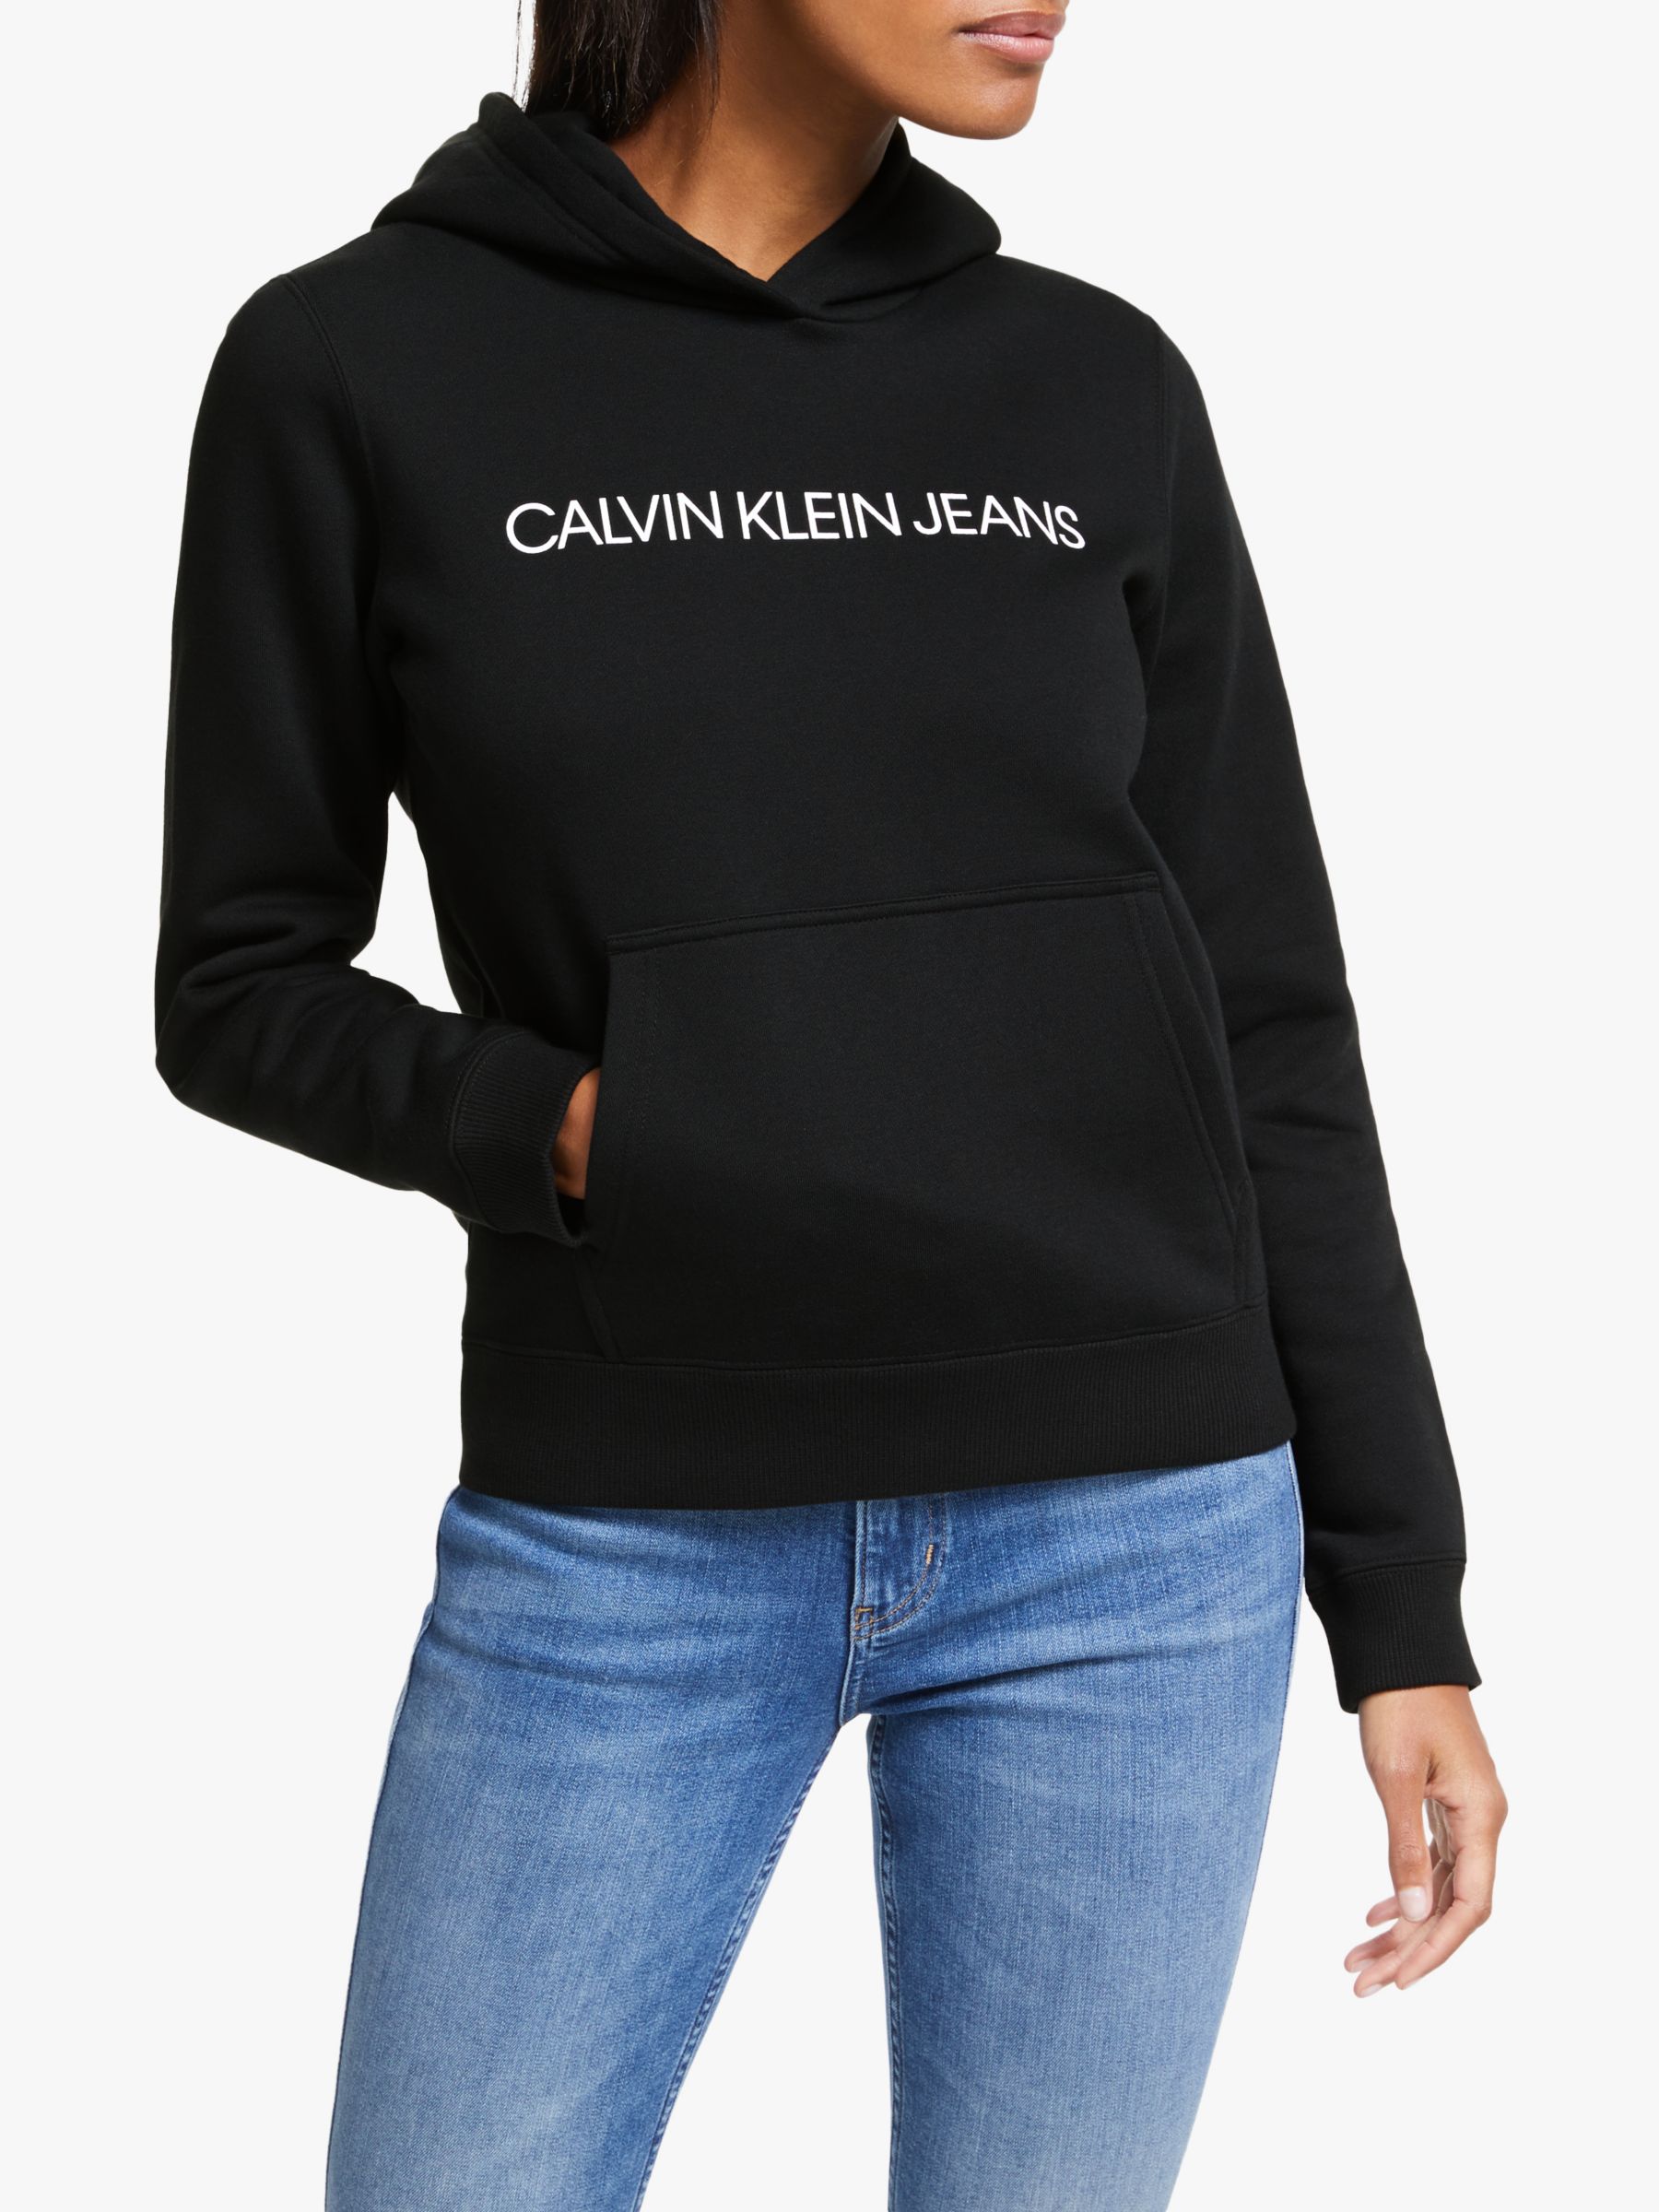 calvin klein hoodie women's